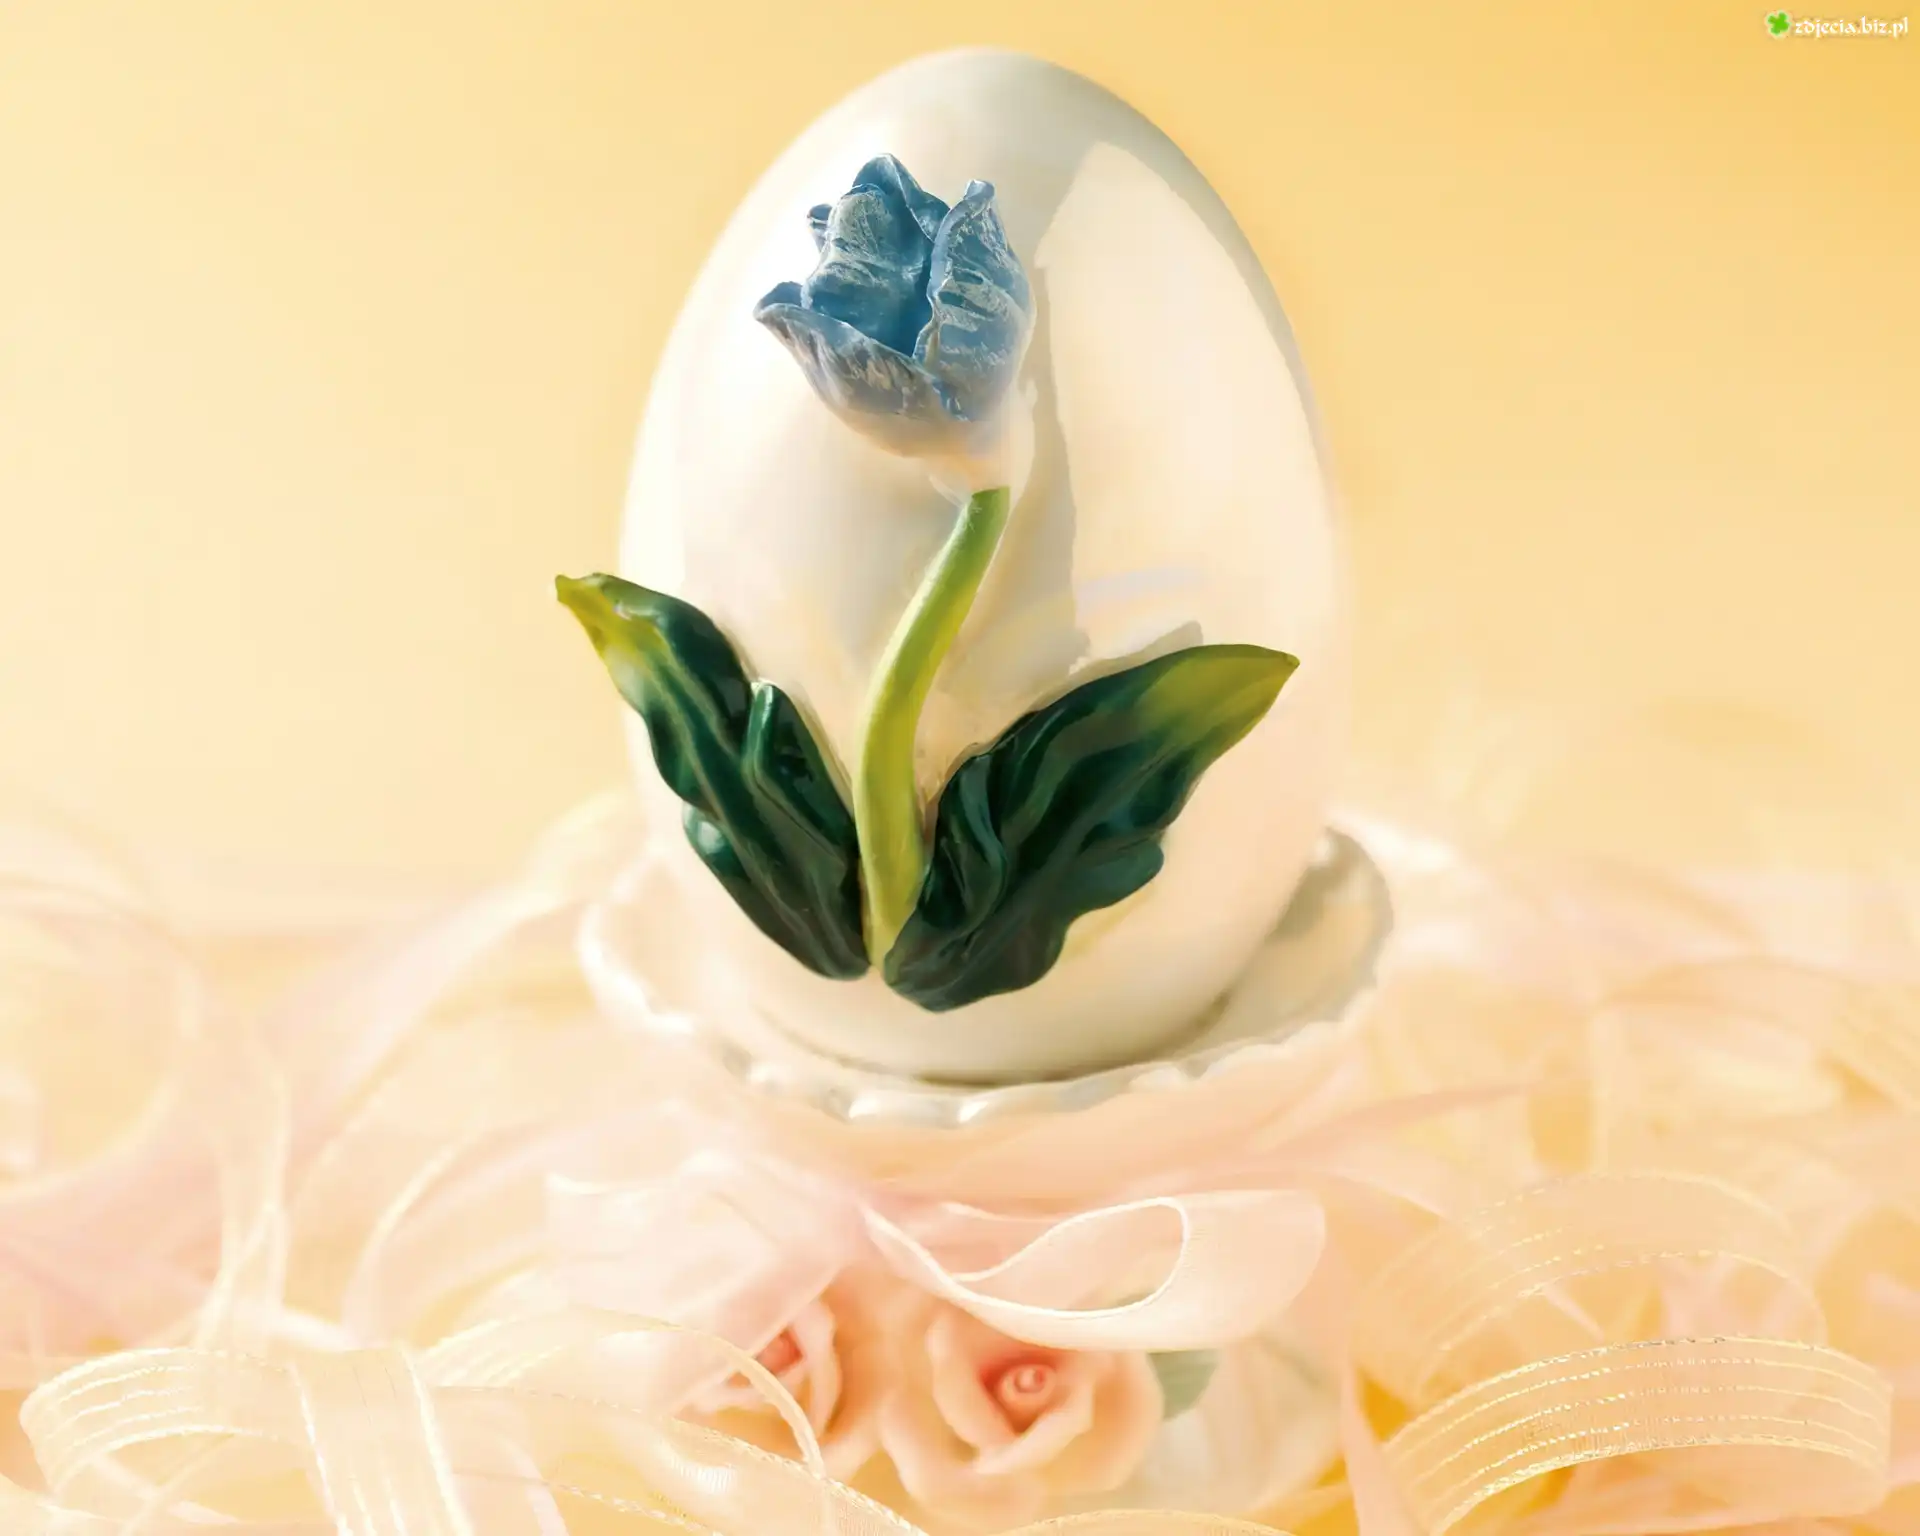 Wielkanocne, Jajo, Niebieski, Kwiatek